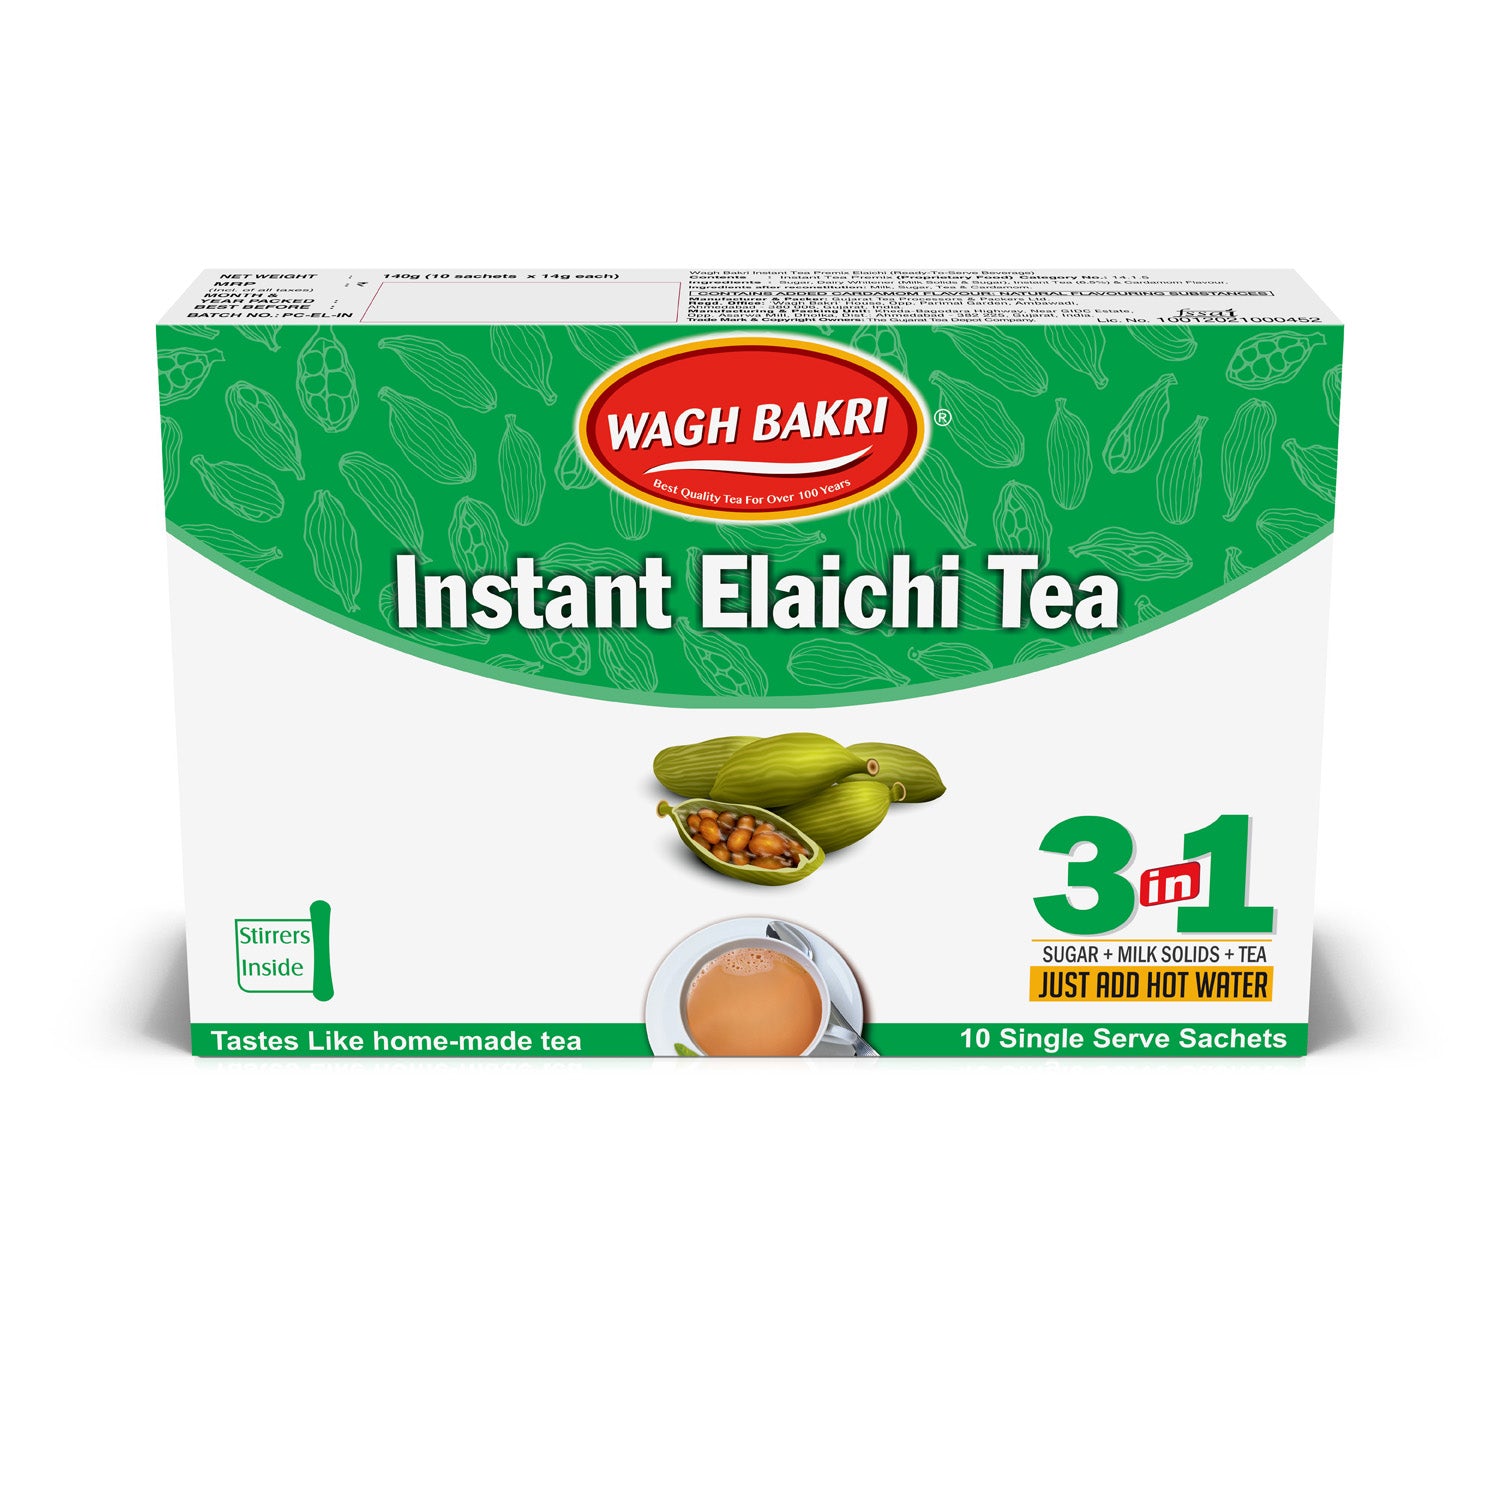 Buy Wagh Bakri Instant Tea - Masala Pack of 2 & Get Wagh Bakri Instant Tea Elaichi Free